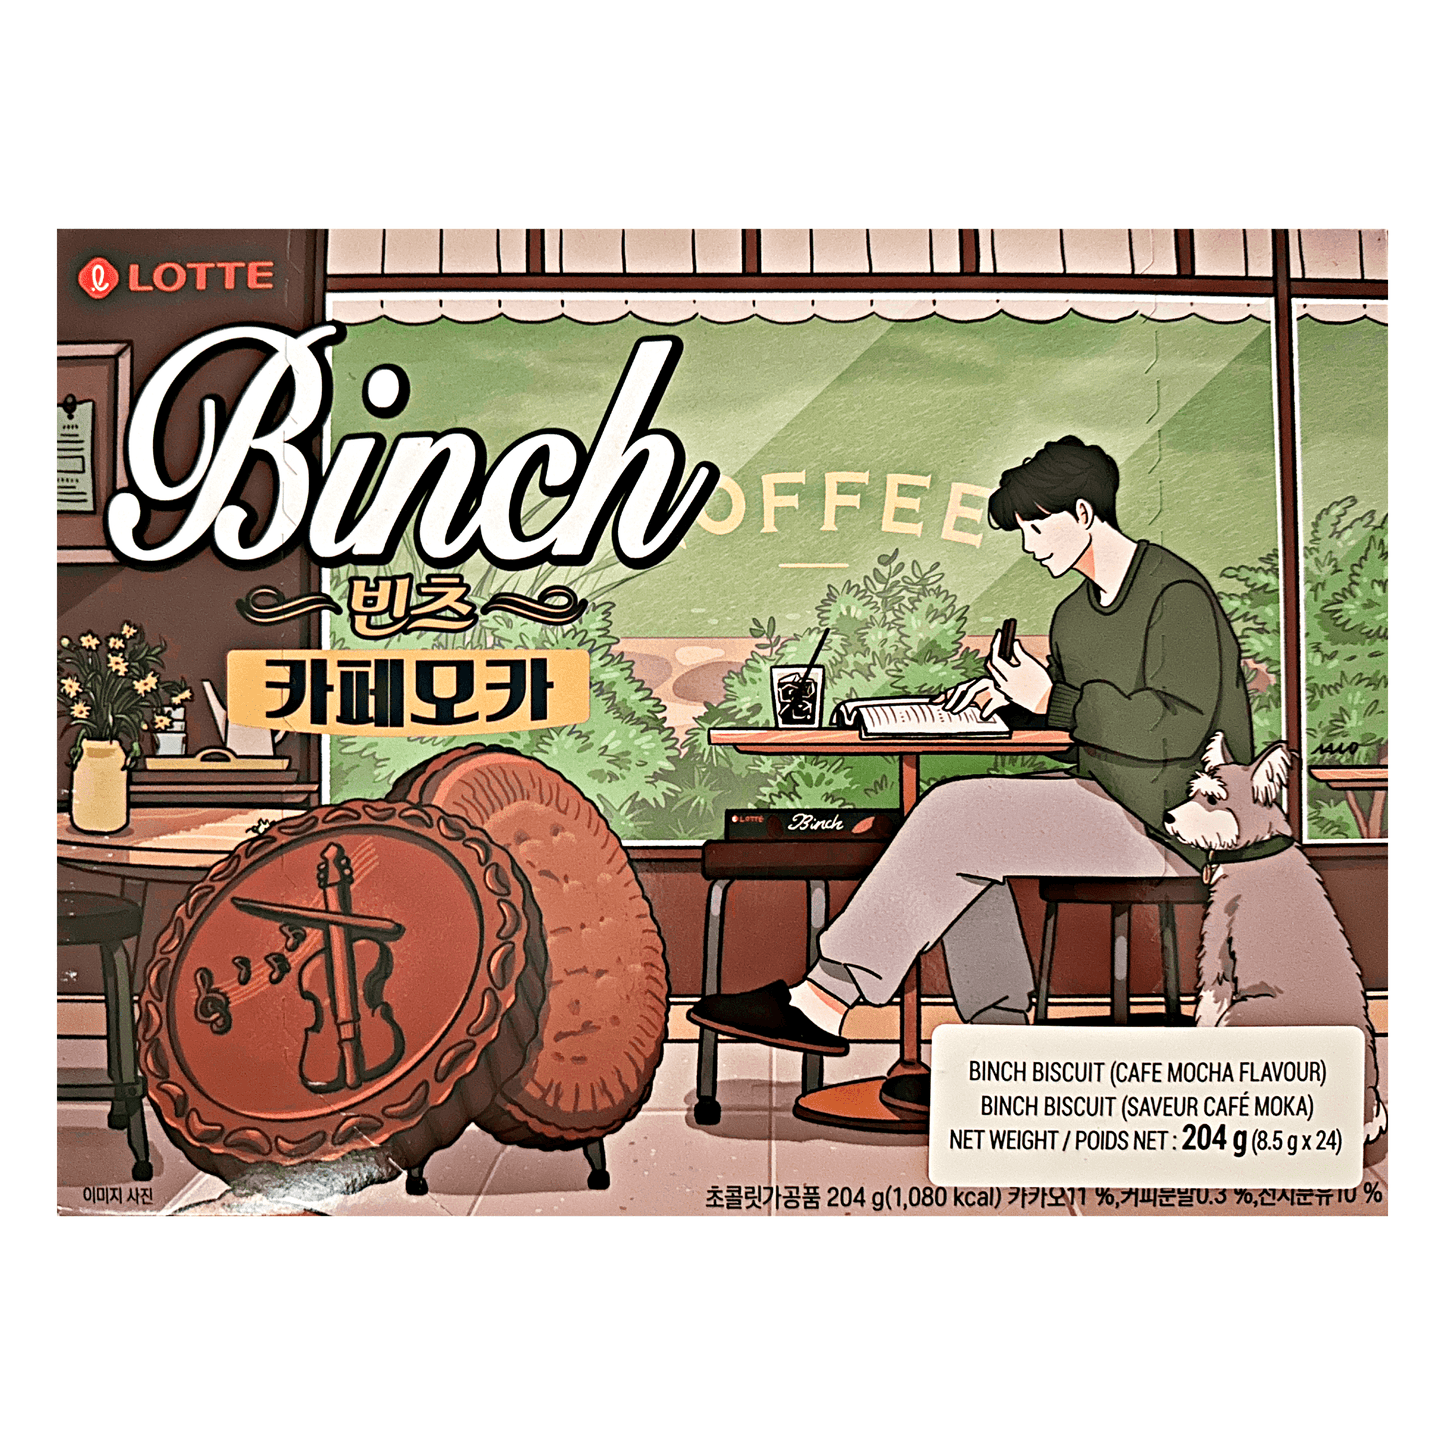 Lotte Binch Biscuit Cafe Mocha Flavor 204g - The Snacks Box - Asian Snacks Store - The Snacks Box - Korean Snack - Japanese Snack